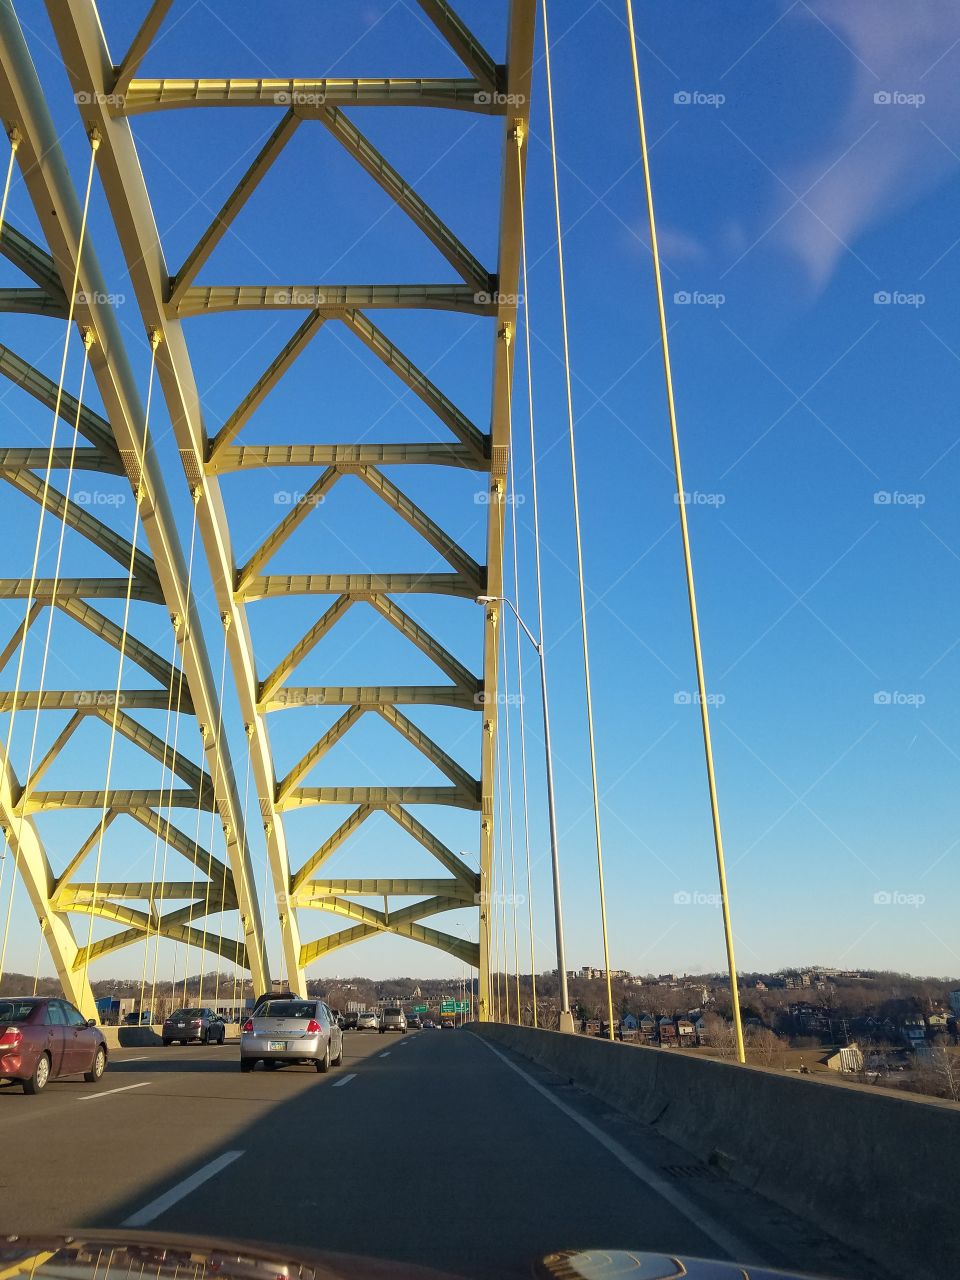 Big Mac bridge in Cincinnati